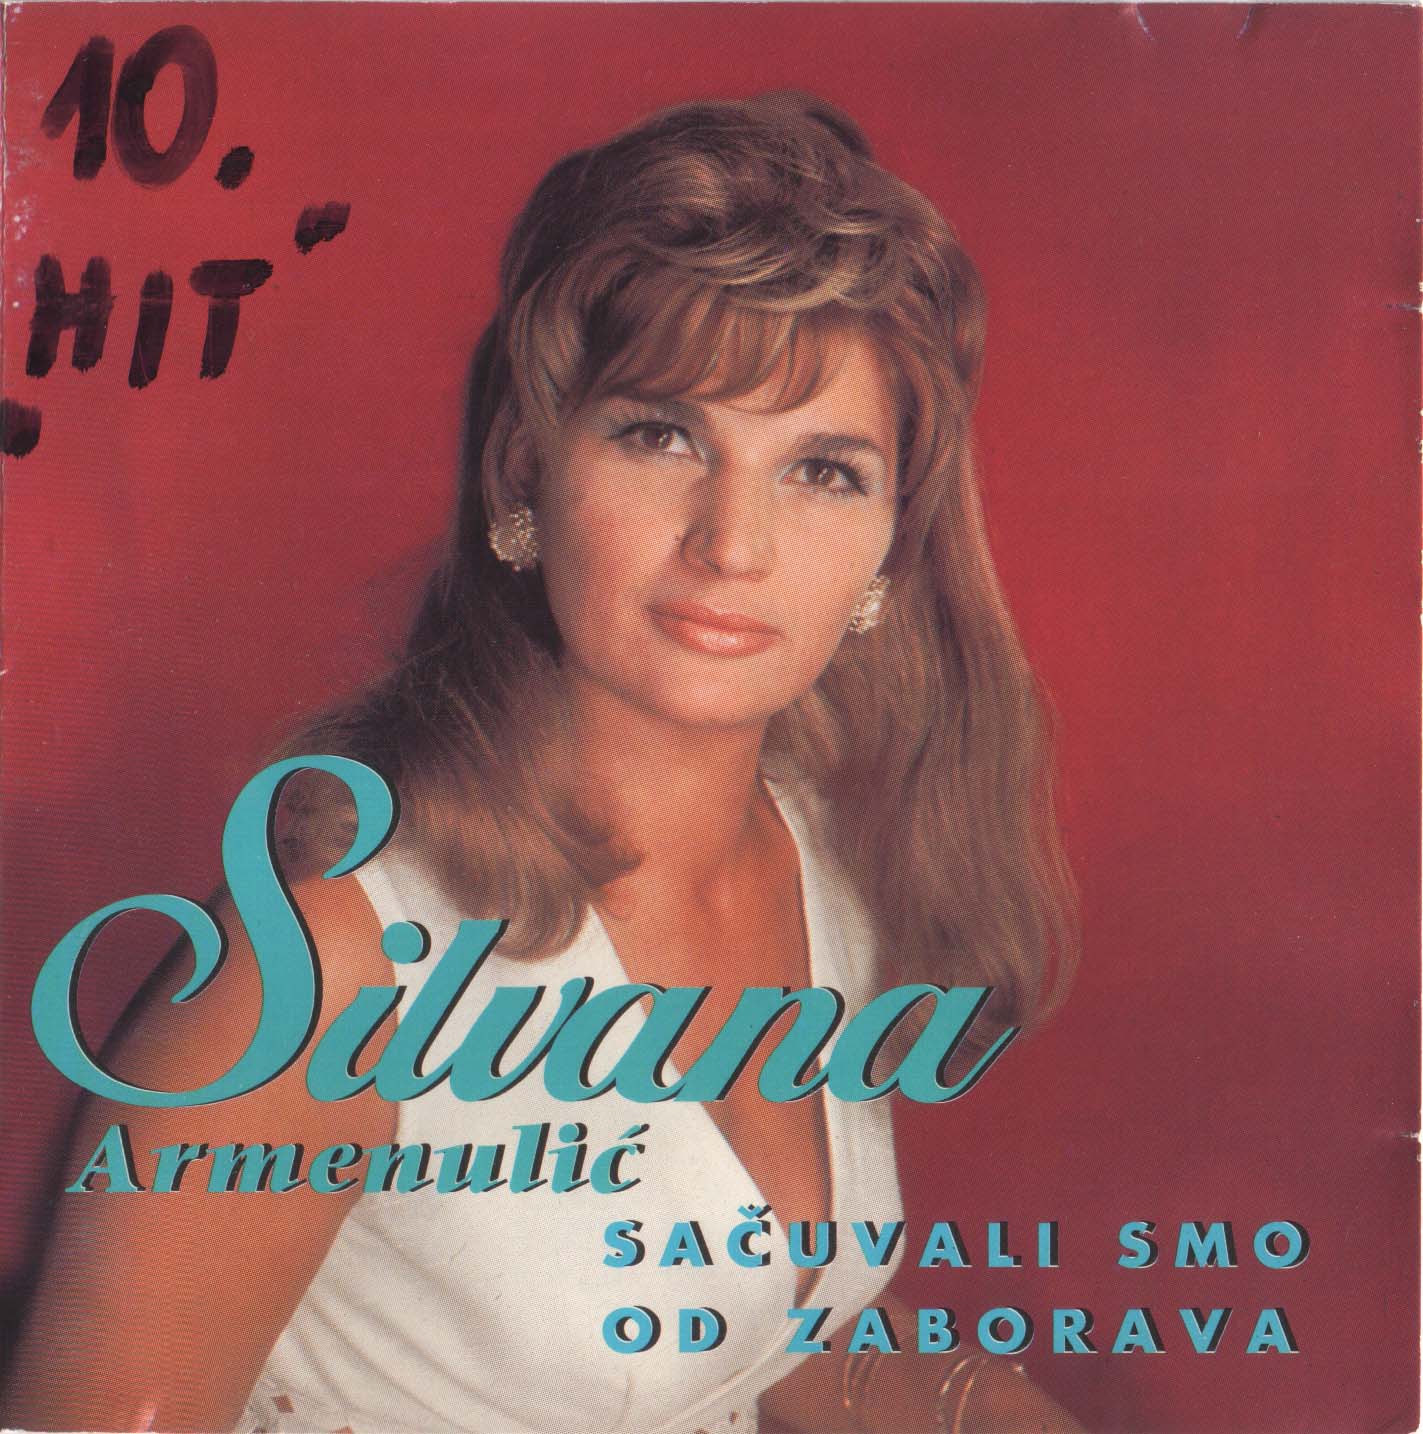 Silvana Armenulic 1996 Prednja